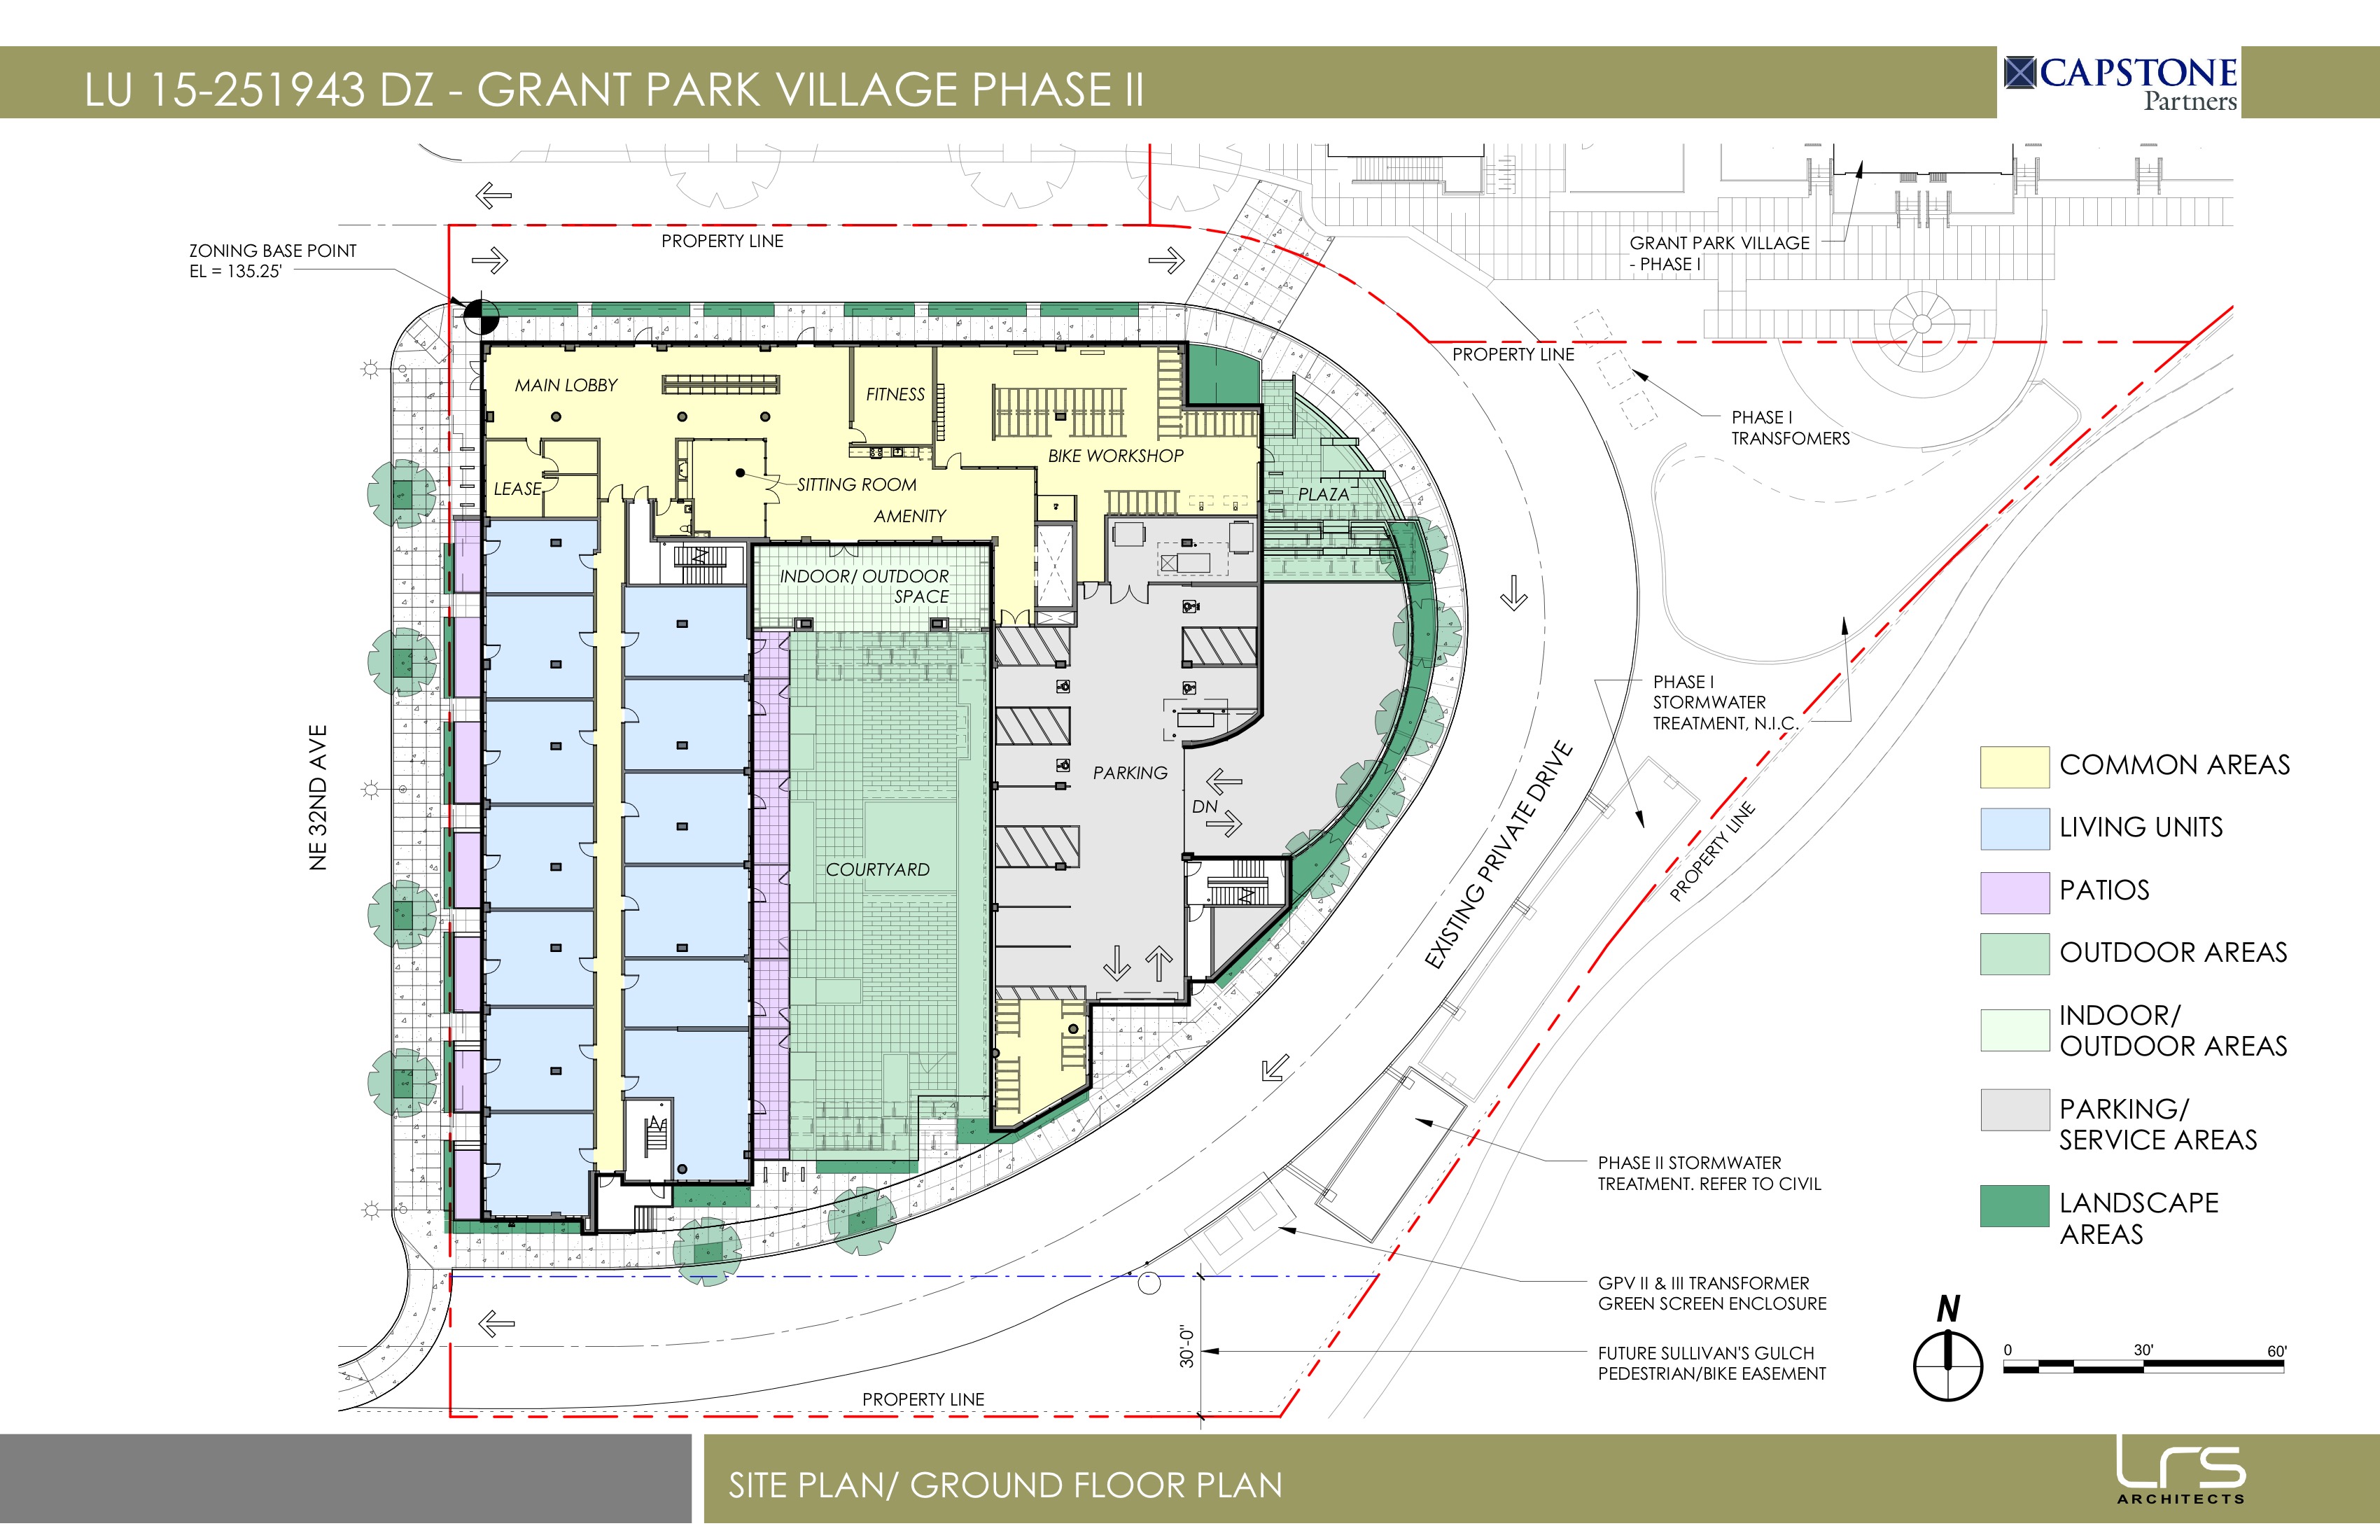 Grant Park Village Phase II